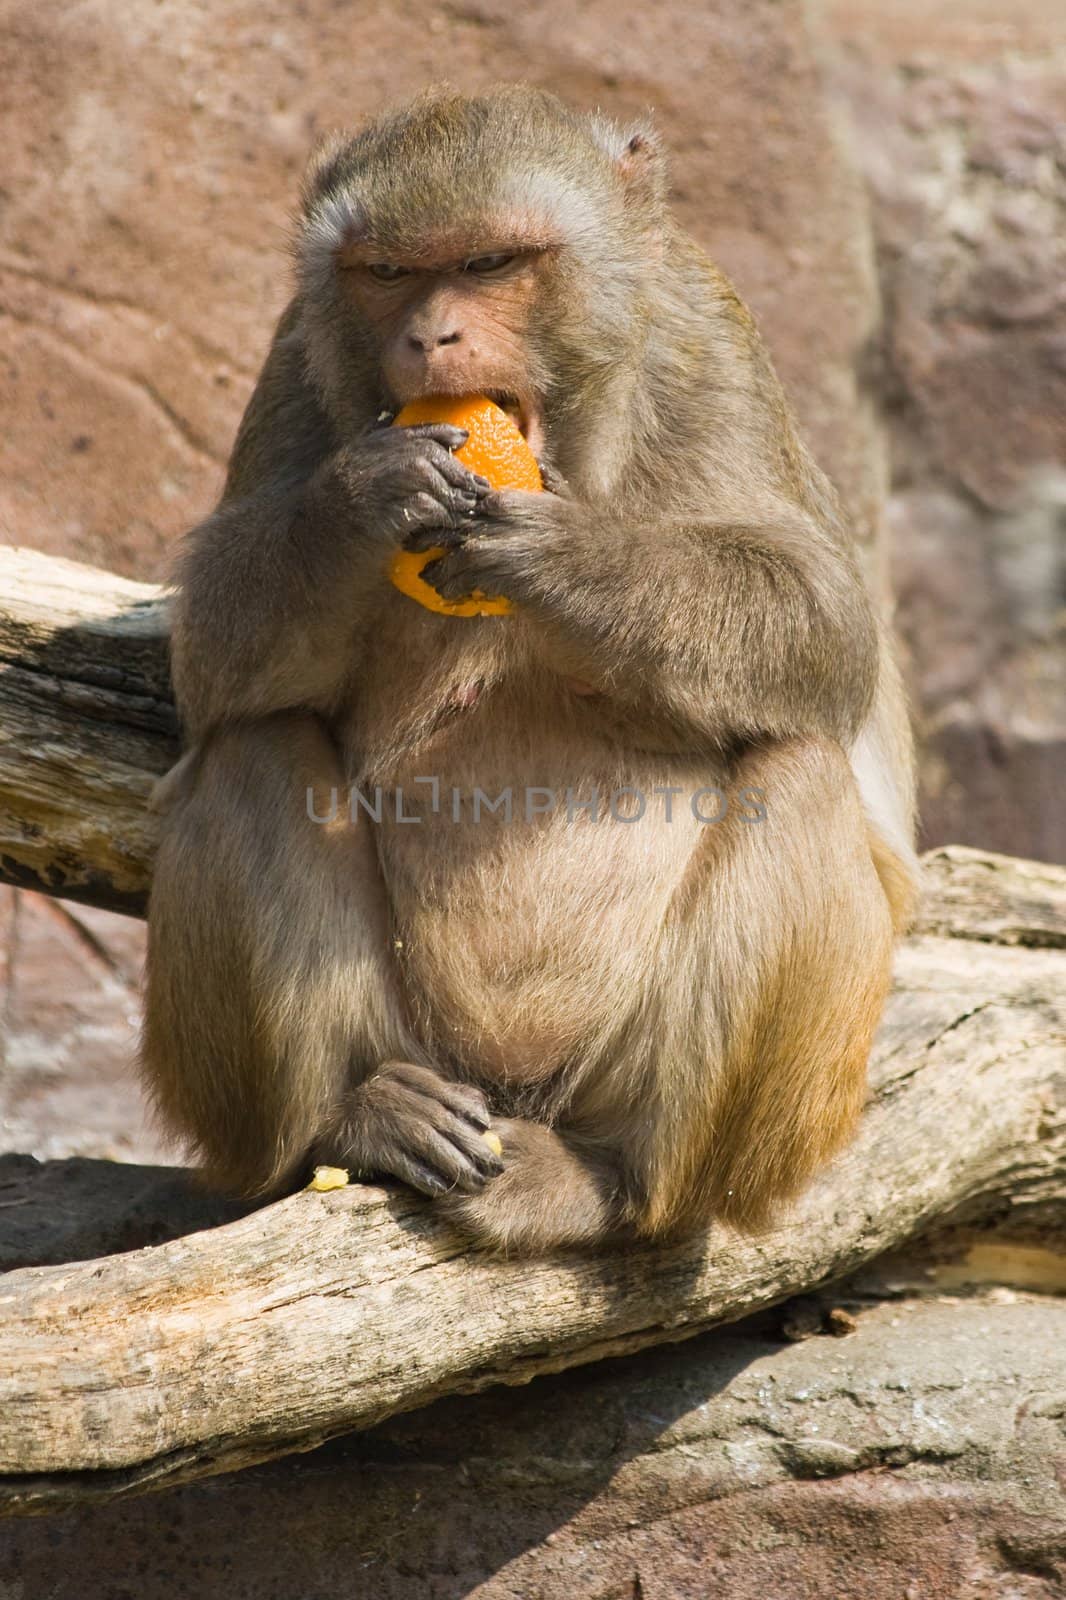 Rhesus monkey eating orange in the sun